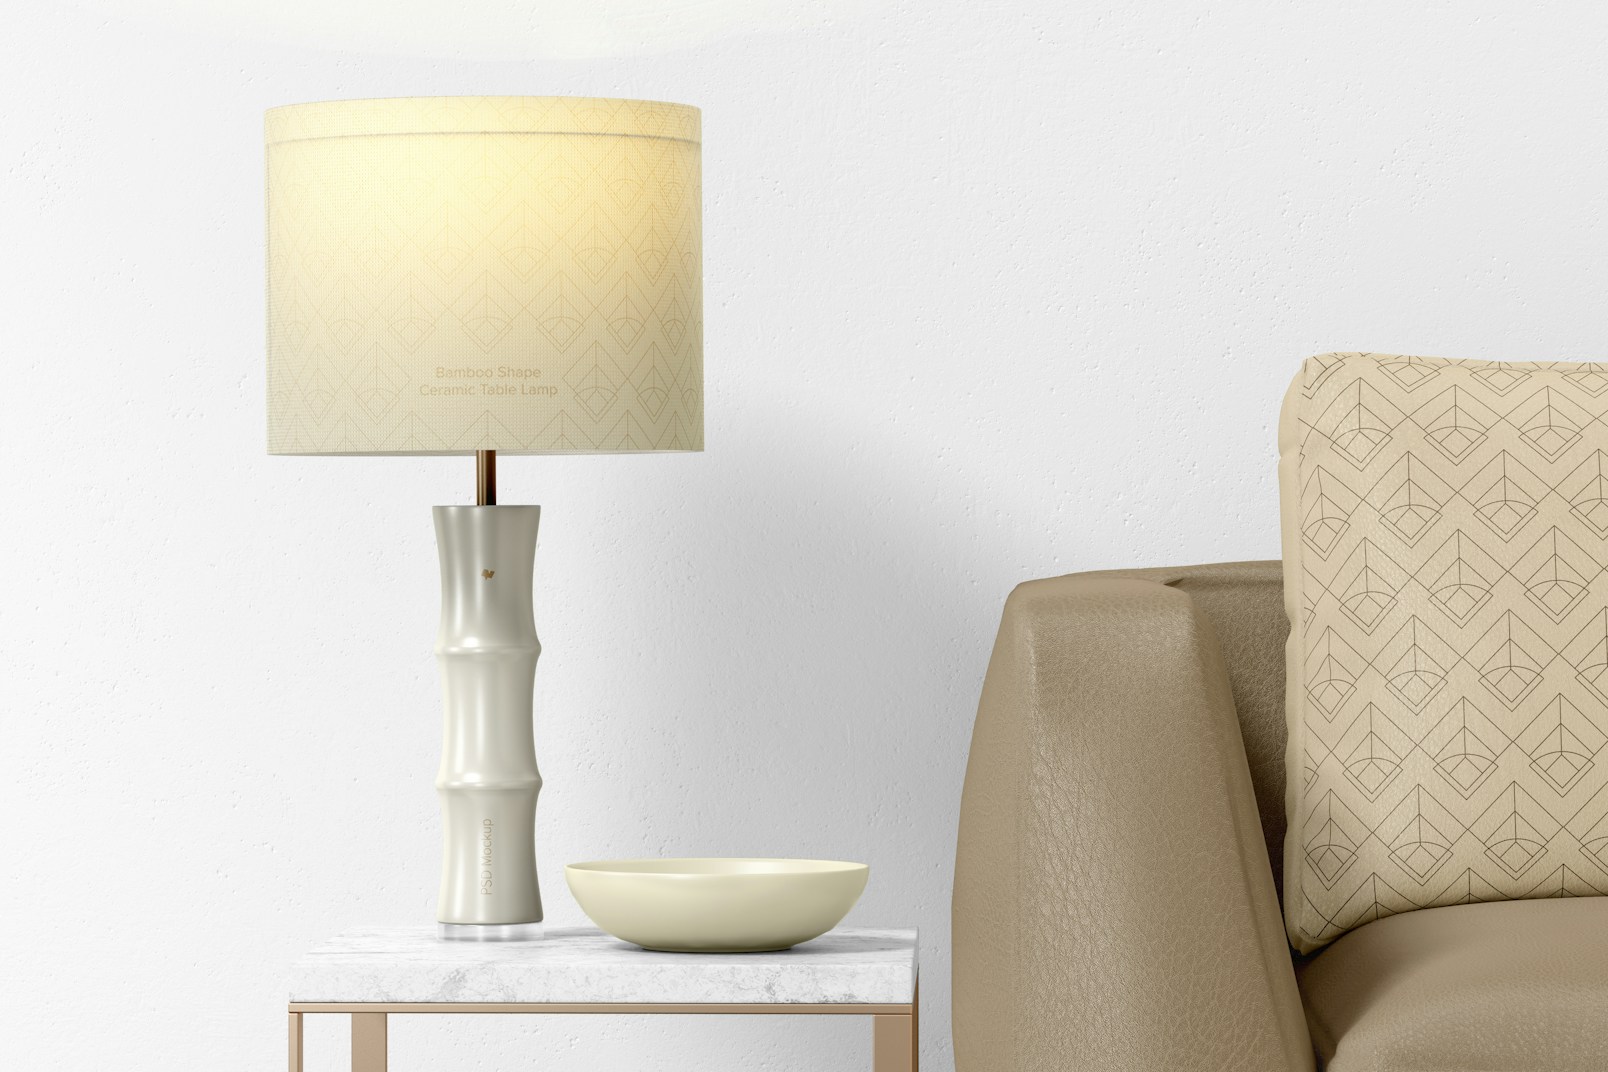 Bamboo Shape Ceramic Table Lamp with Sofa Mockup